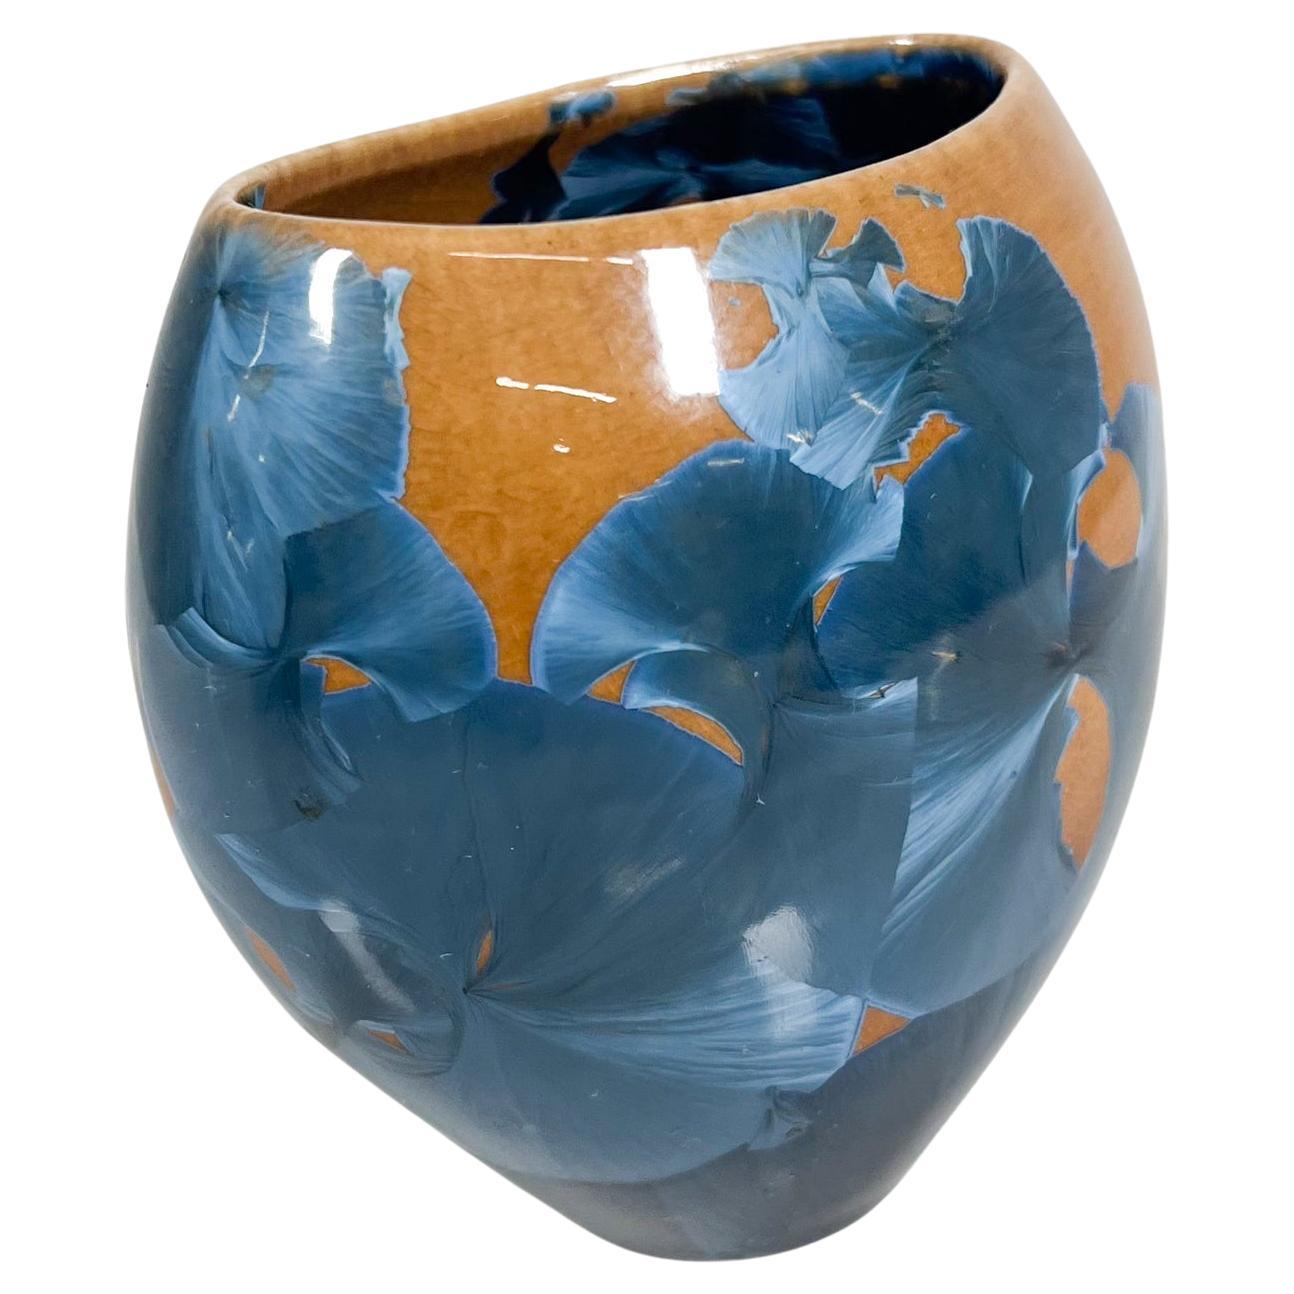 
Psychedelic Pottery Art Blue & Orange Petite Crystalline Vase
signed Louis Reding
San Diego Calif
3.75 x 2.5 d x 3.75 h
Crystalline Glaze Vase
Preowned vintage, please see images provided.